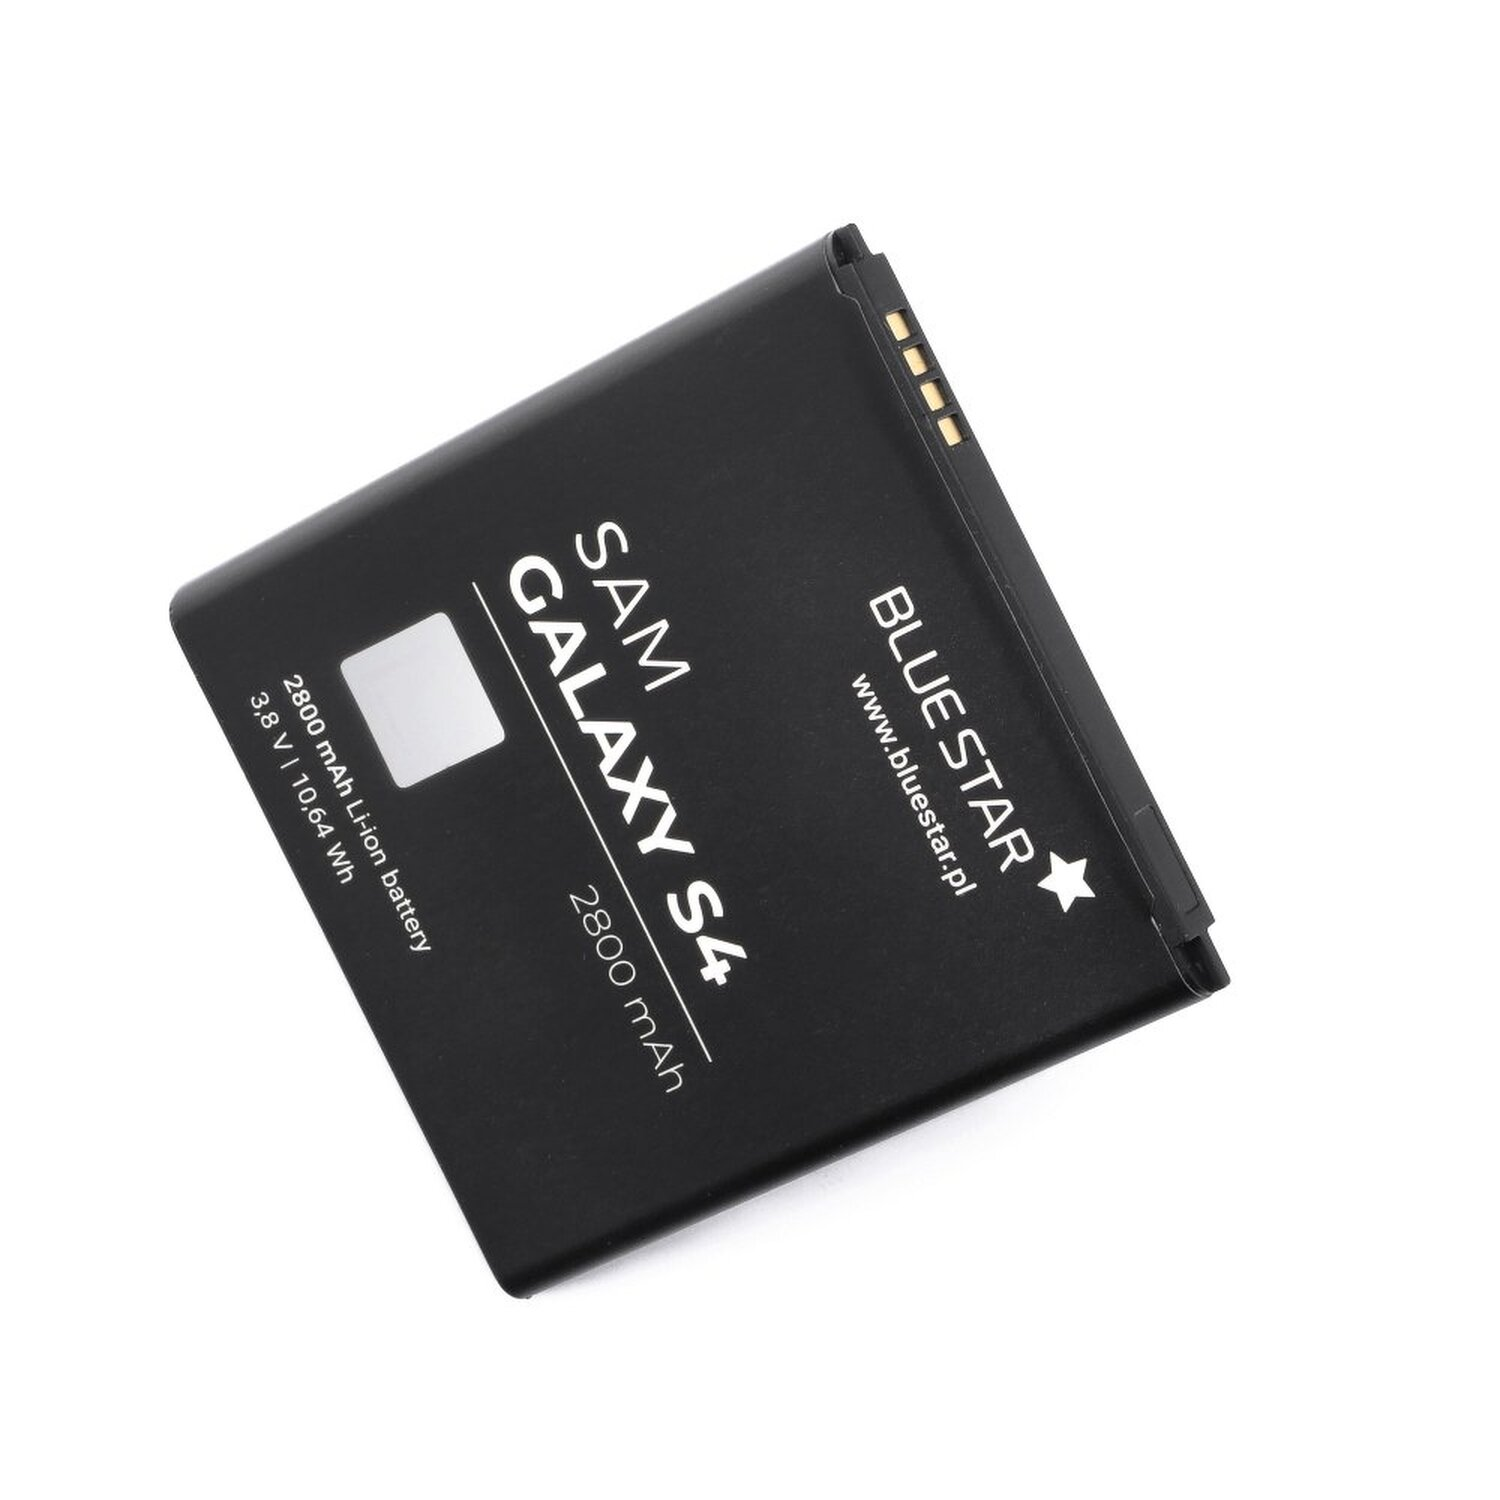 Li-Ion Samsung Akku für I9500 BLUESTAR Handyakku S4 Galaxy